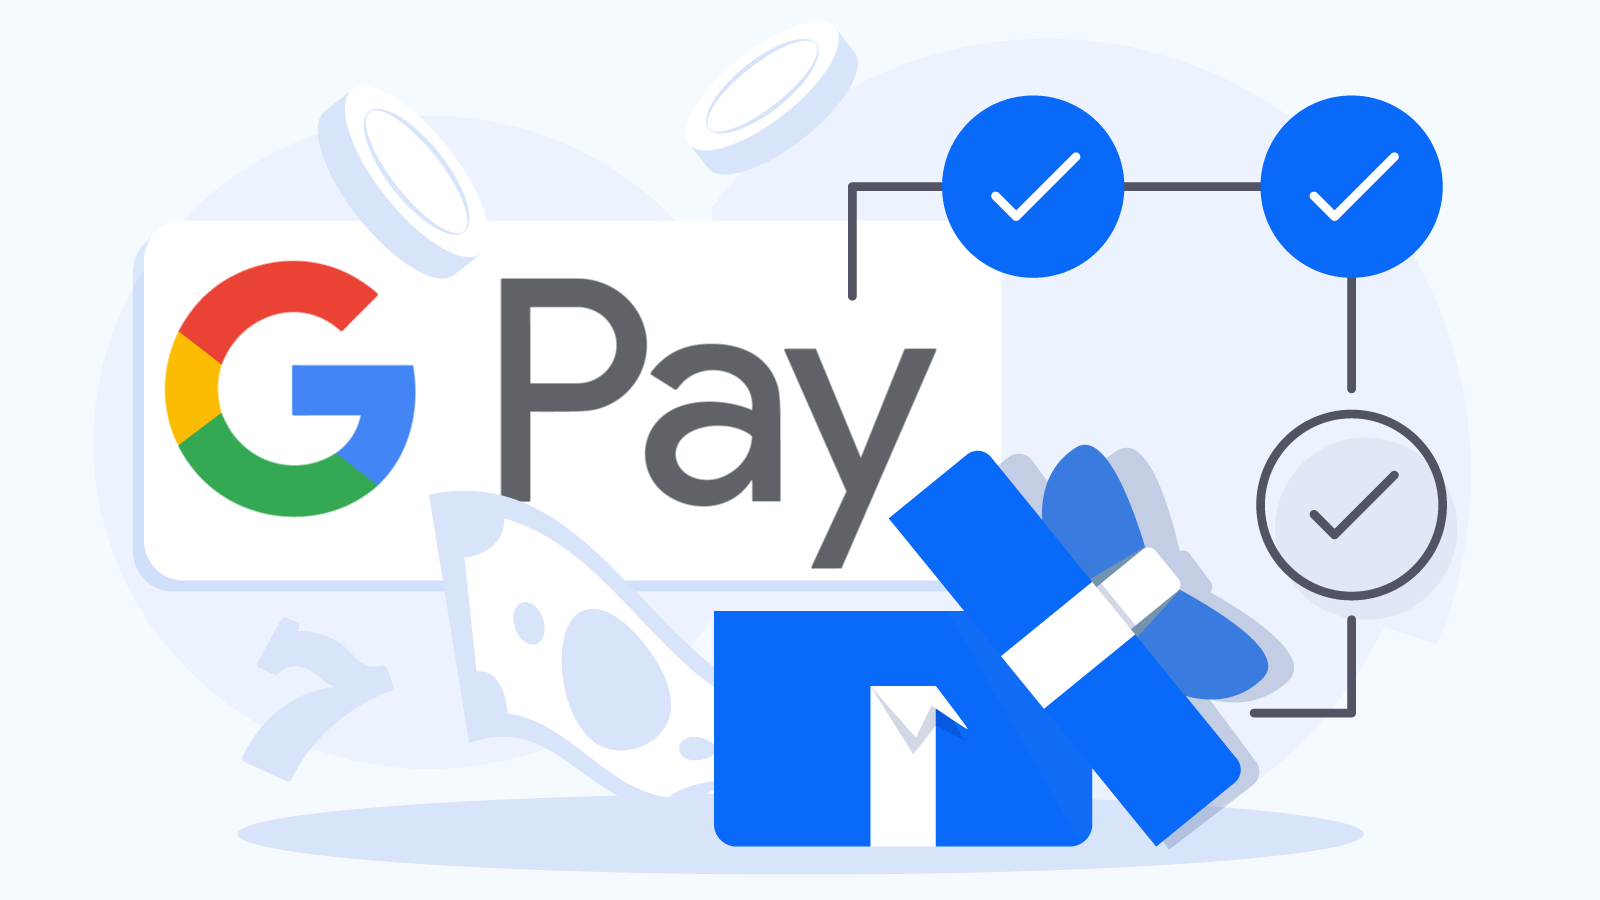 How To Claim Bonuses Using Google Pay